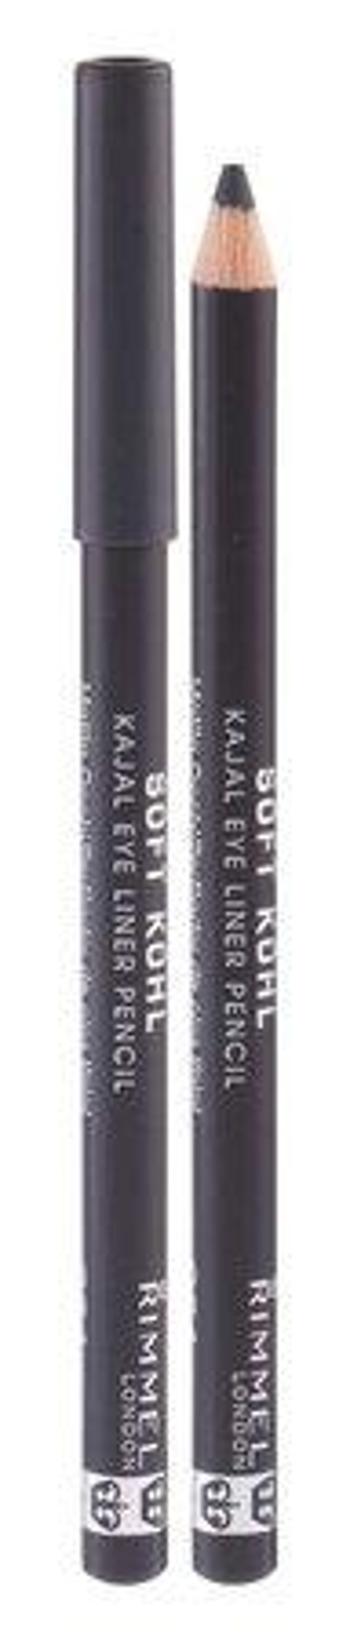 Rimmel London Soft Kohl Kajal Eye Liner Pencil (064 Stormy Grey) 1,2 ml, 1,2ml, 064, Grey